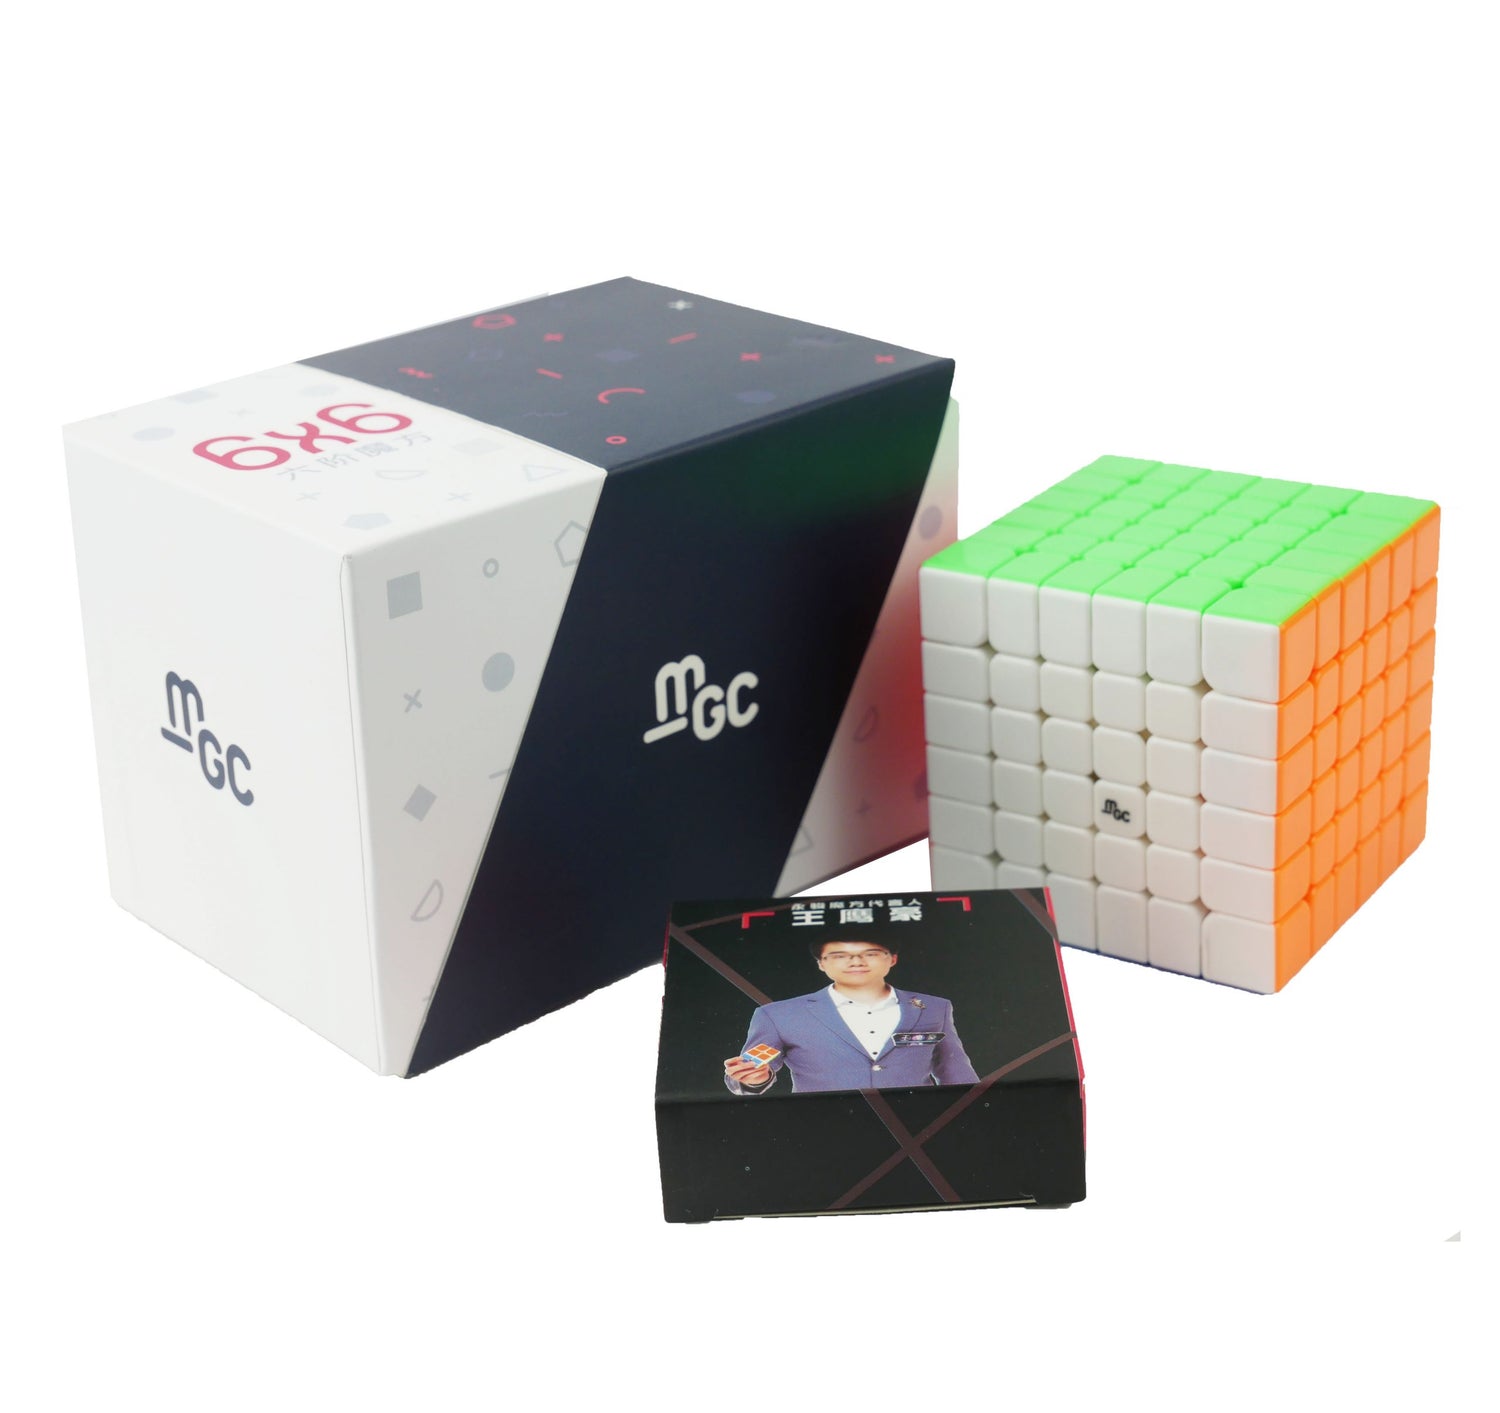 6x6 Rubik's Cube